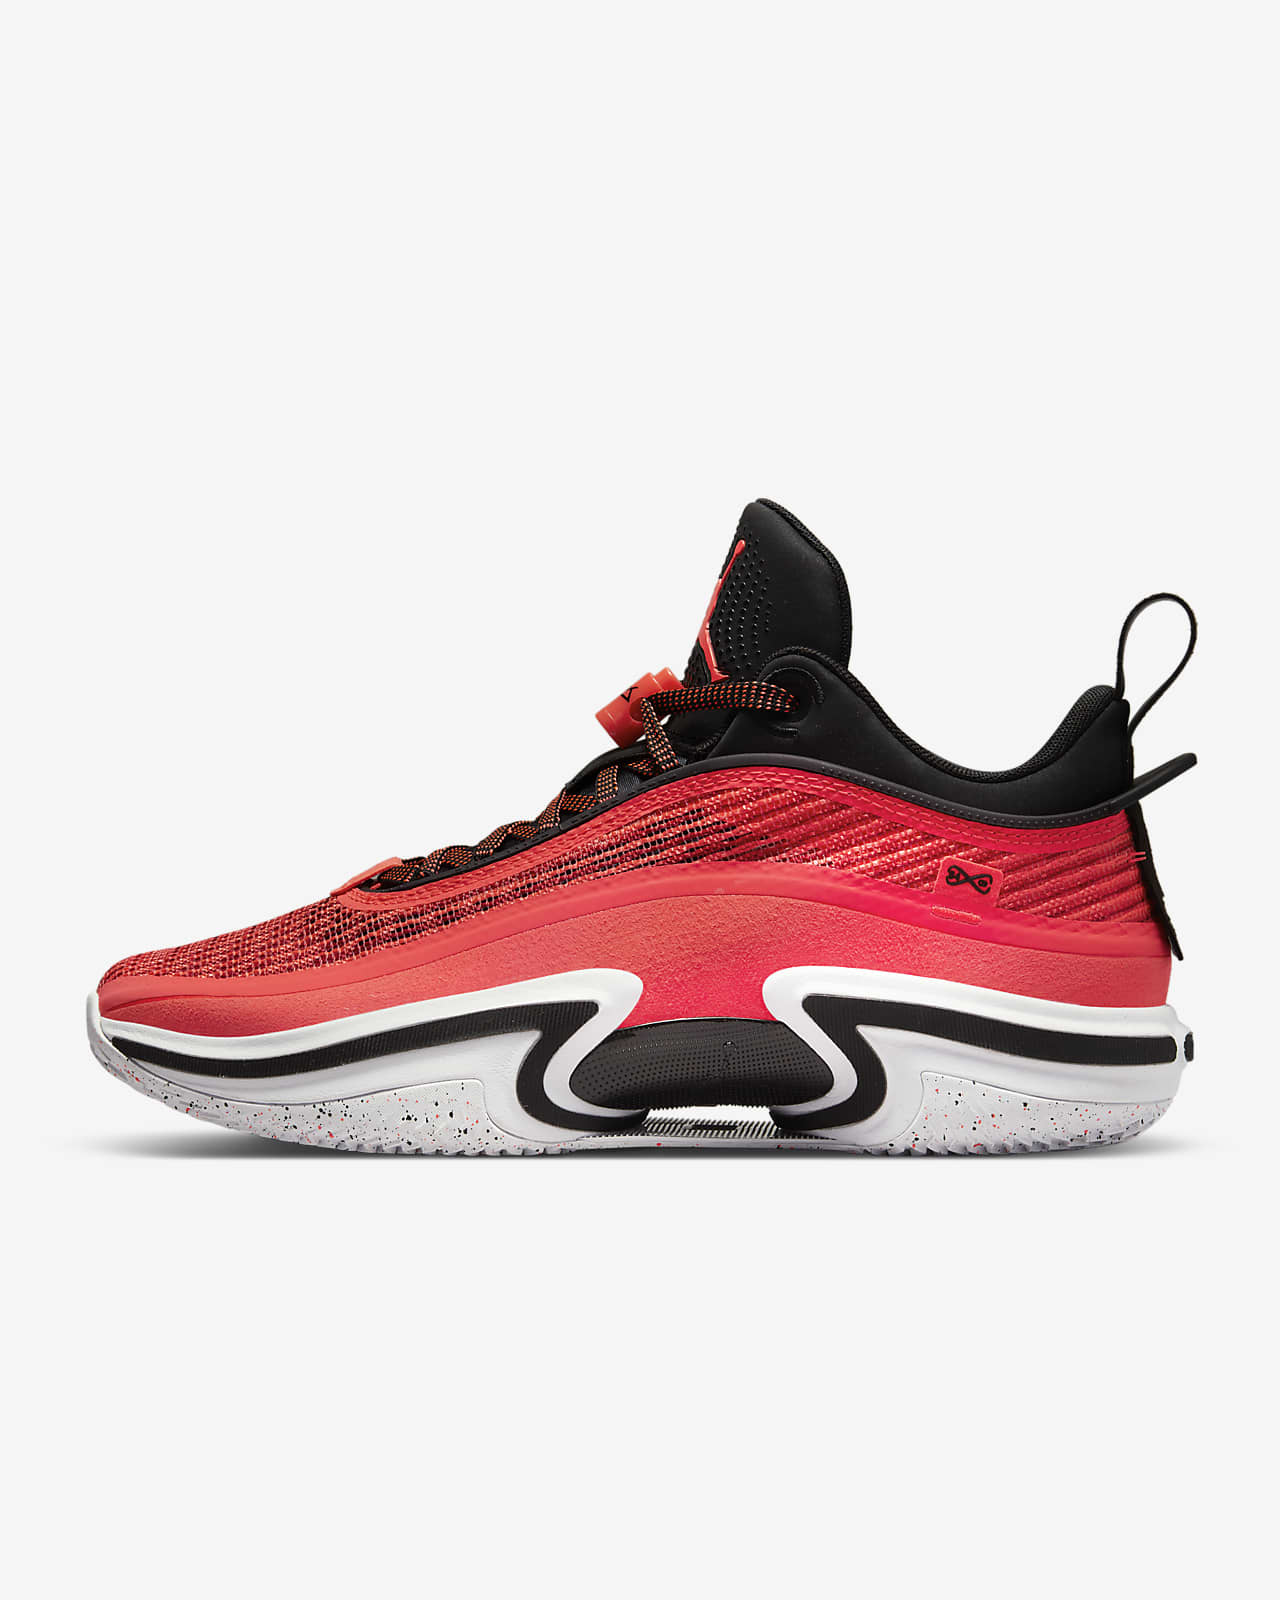 Air Jordan XXXVI Low Men's Basketball Shoes